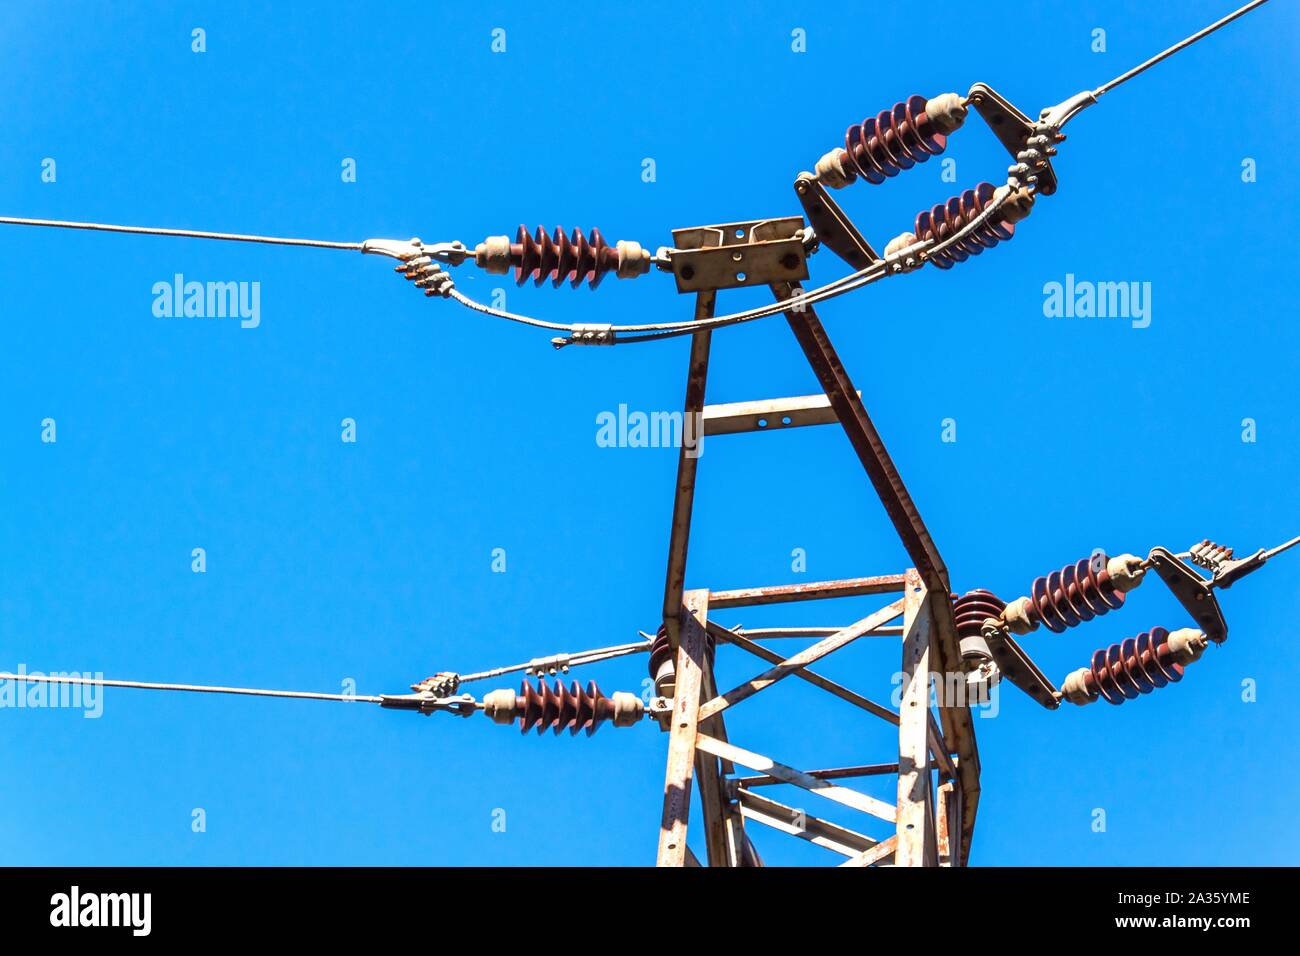 Distribution of electricity. Power pillar against blue sky. Ceramic insulator. Electrical energy. Stock Photo